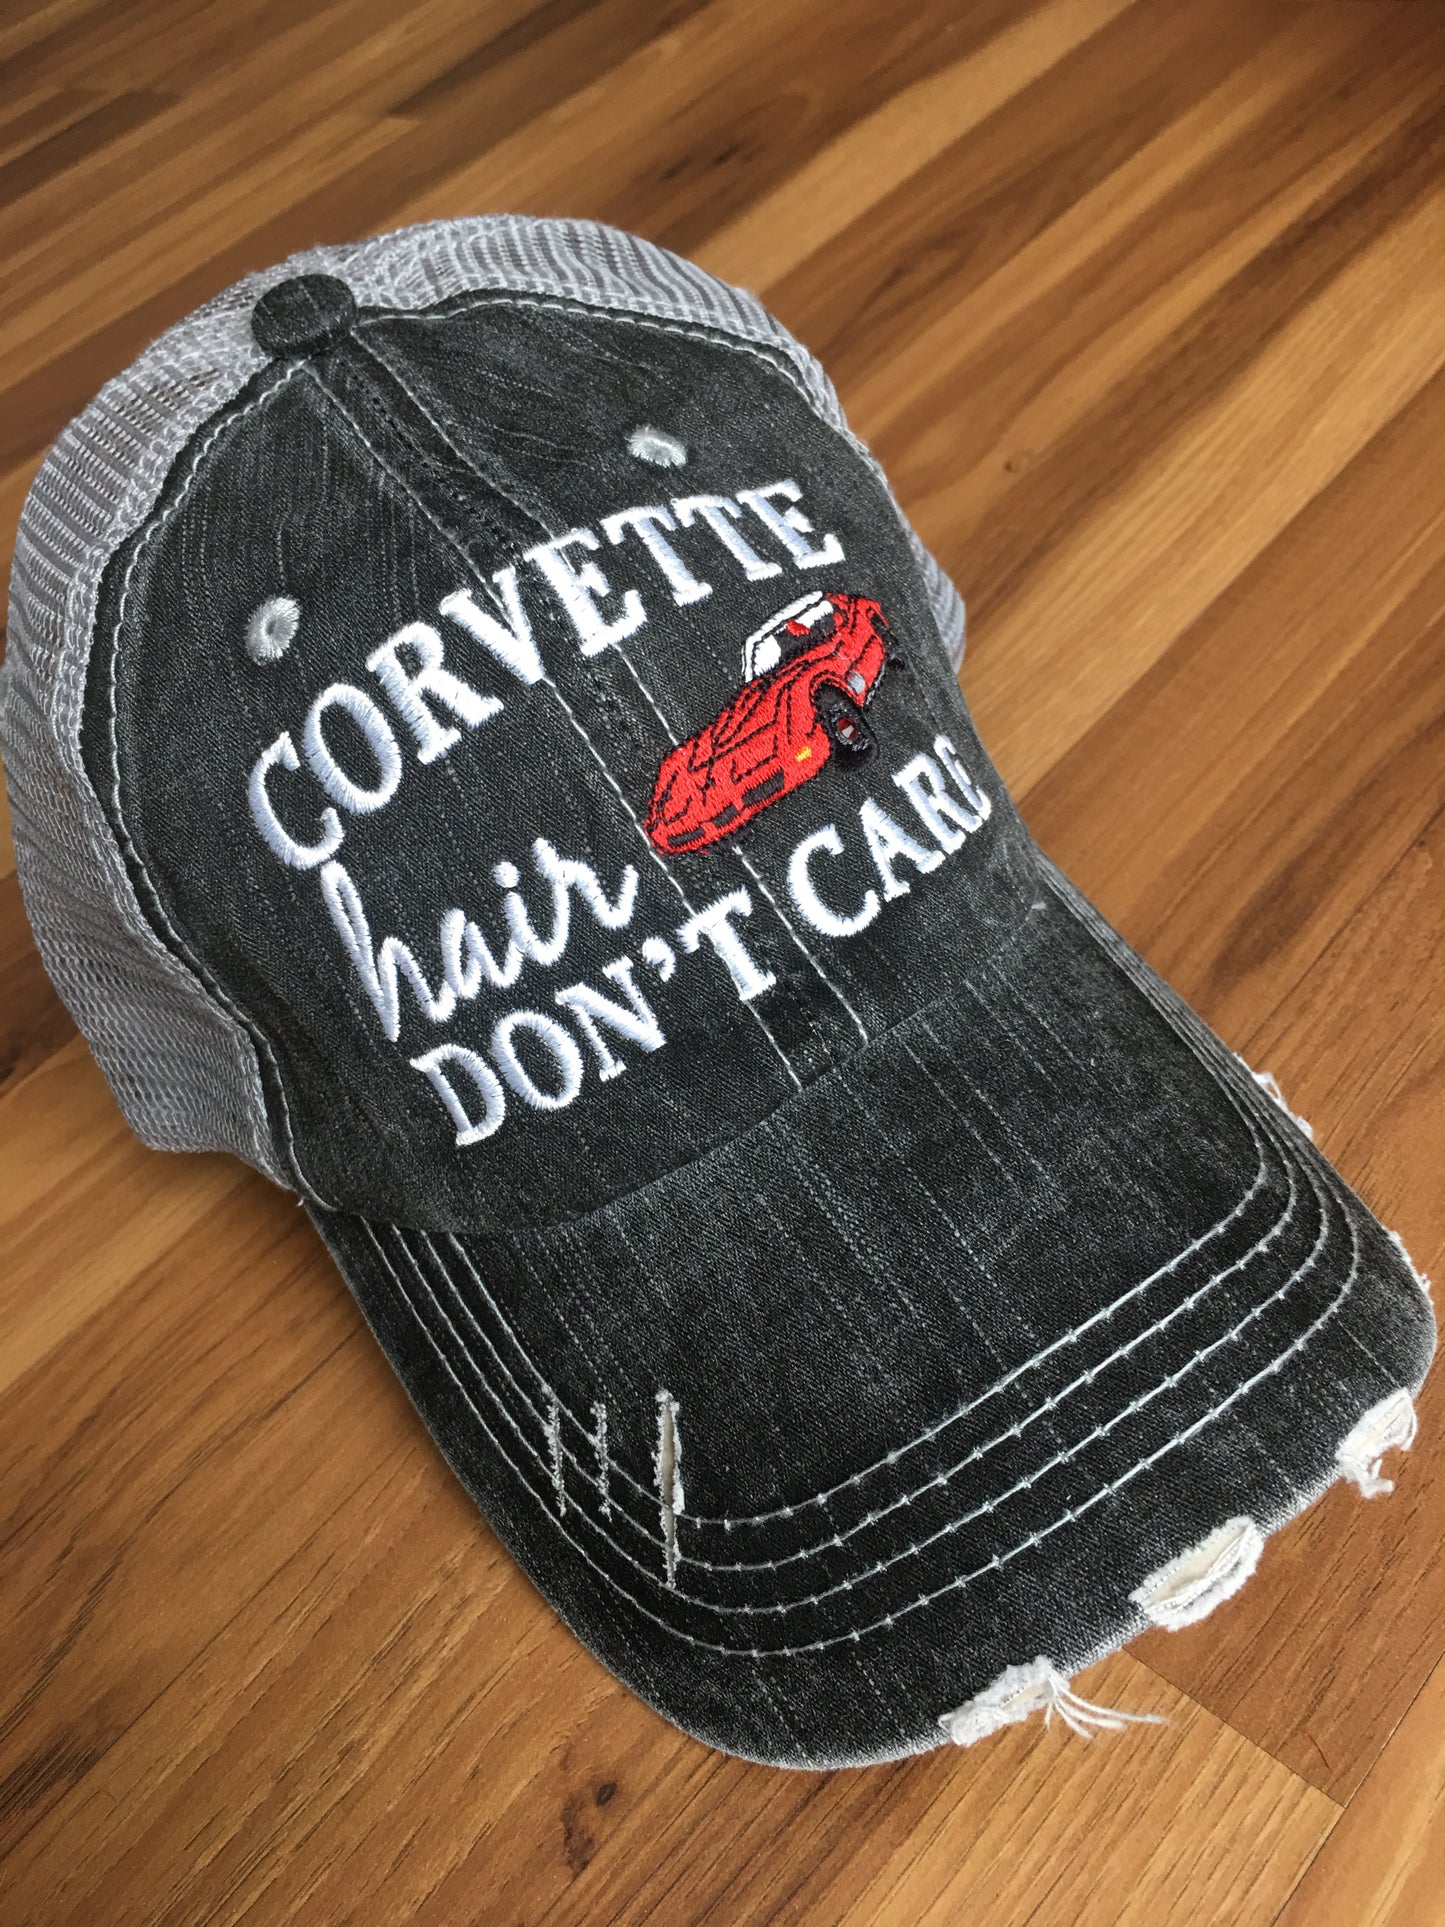 Corvette hats { Corvette hair don't care } Customize • Gray distressed trucker caps • Unisex • Car hat - Stacy's Pink Martini Boutique